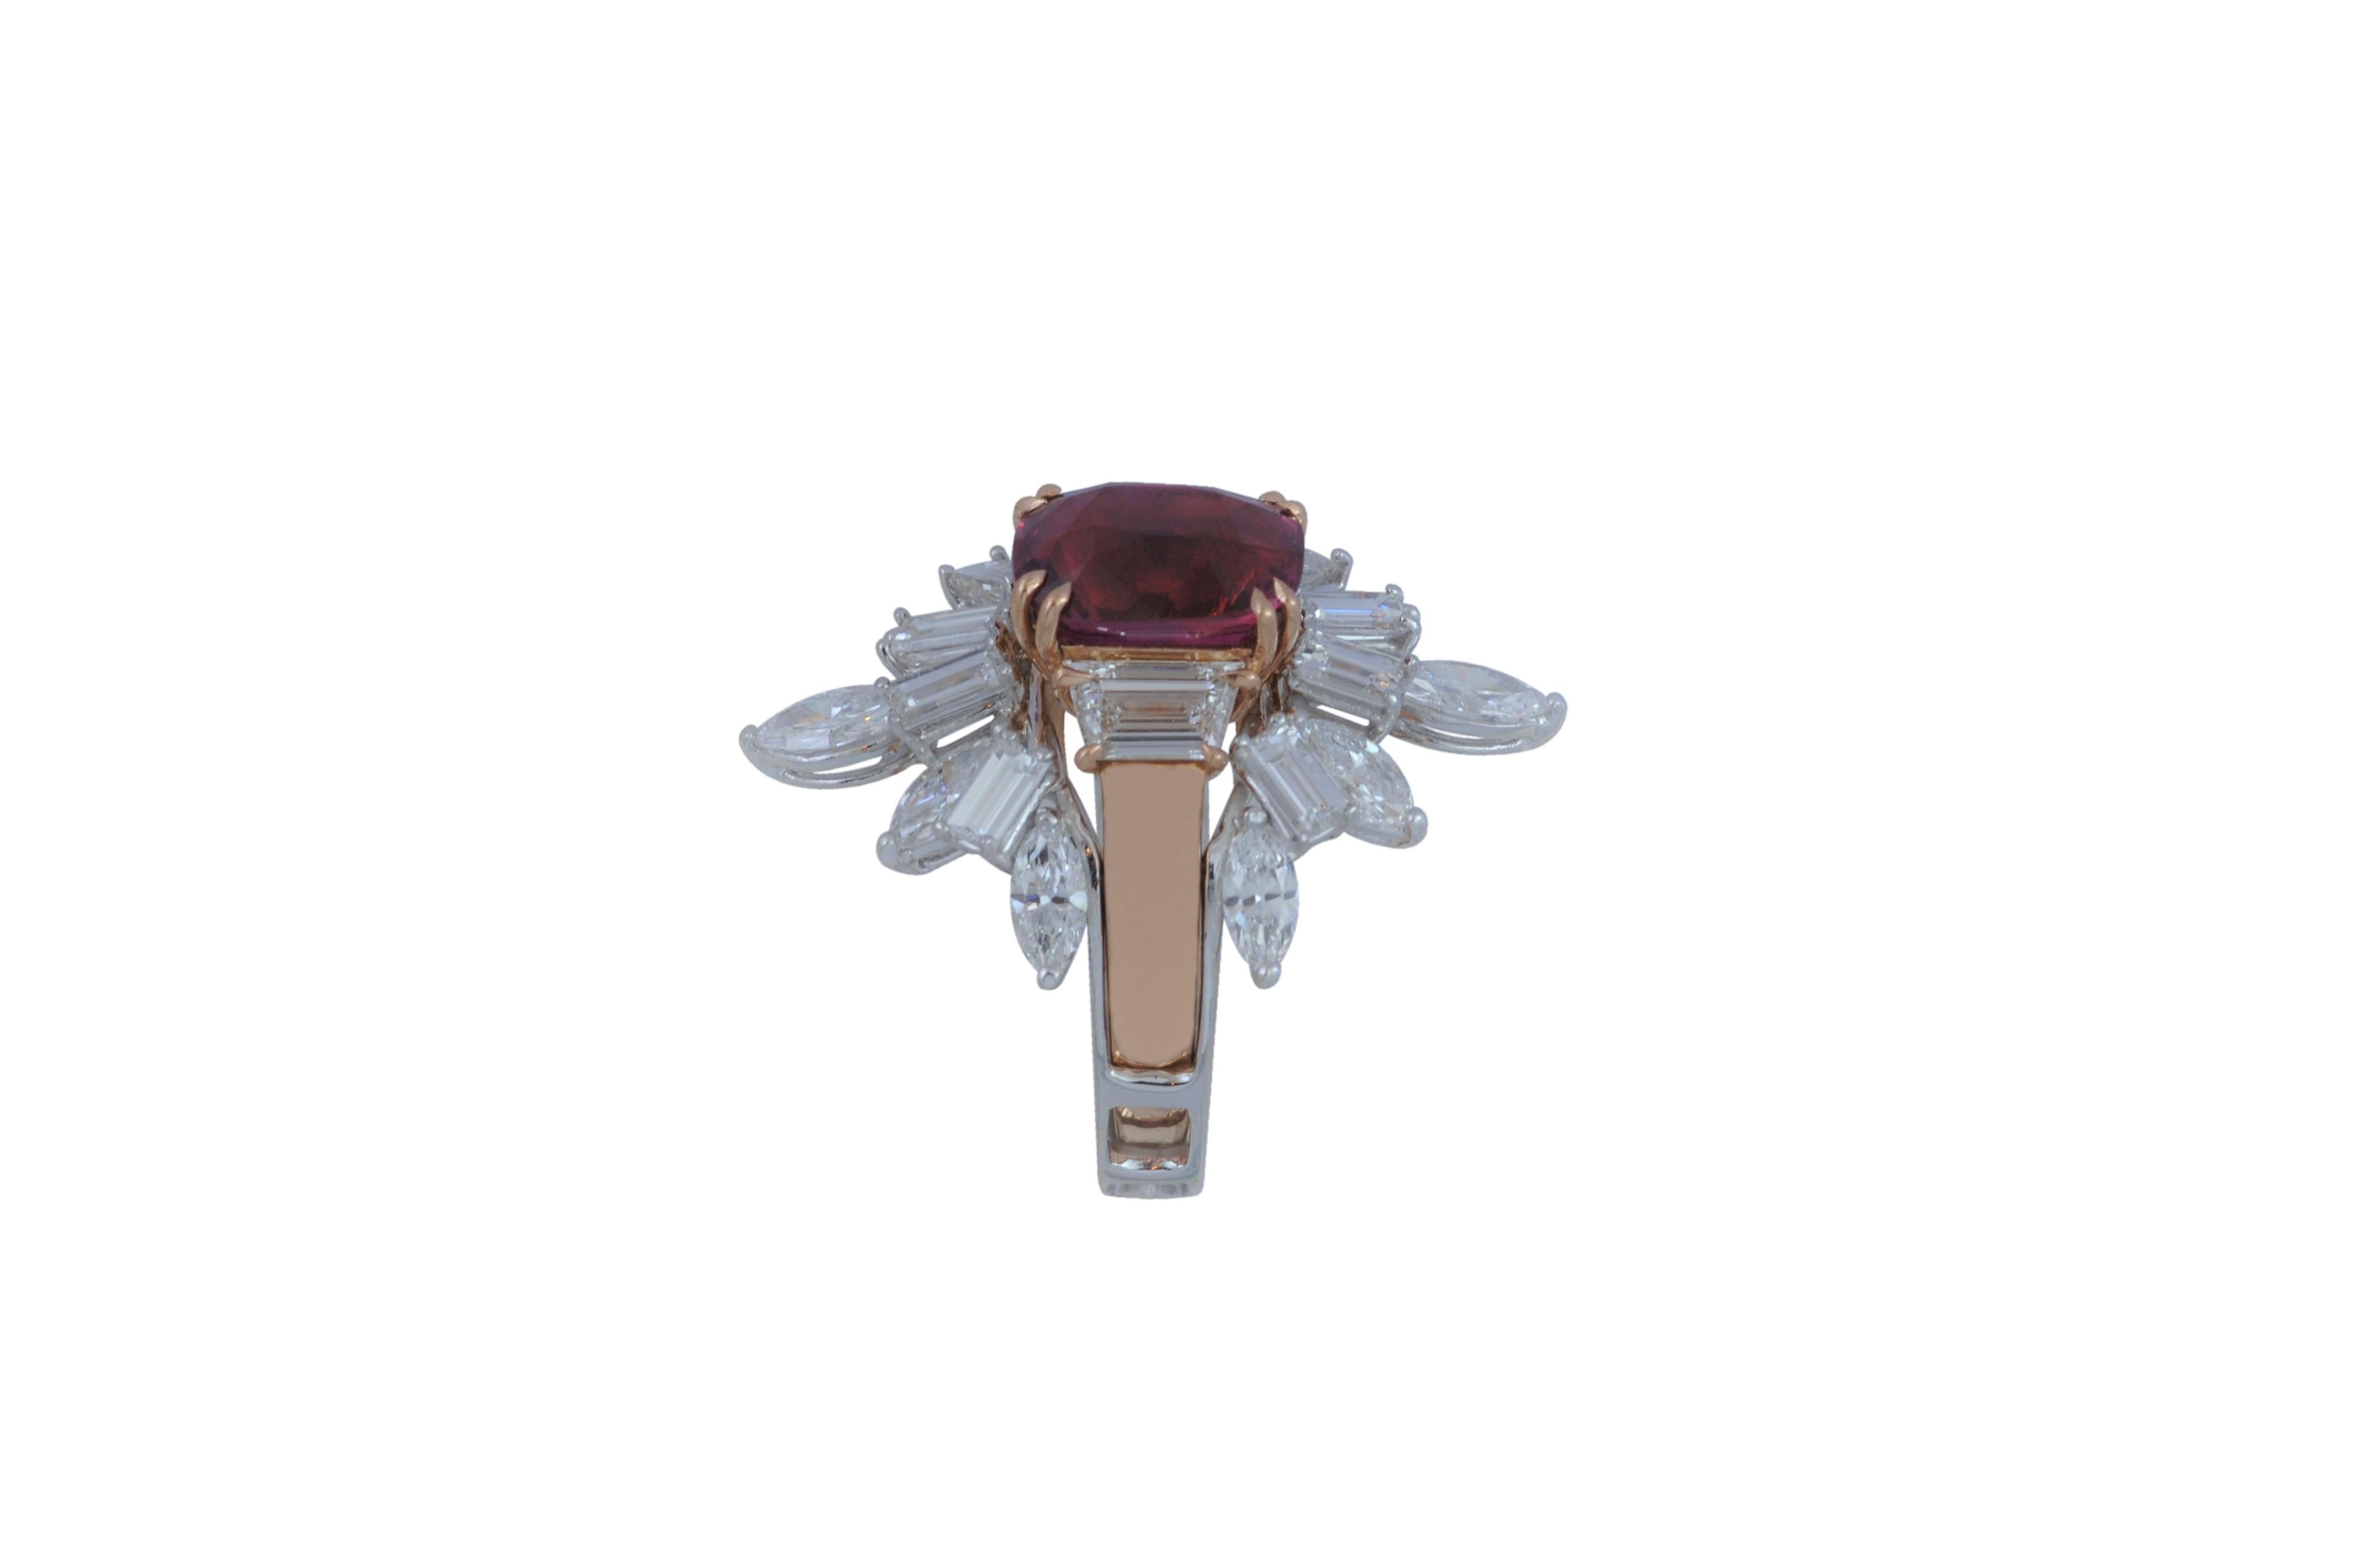 Ruby 4.74 carats with Diamond 0.92 carats Ring set I 18 Karat Rose Gold Settings 
(GRS Certified)
Diamond 2.9 carats Jacket Ring set in 18 Karat White Gold Settings 
(Jacket)

Main Ring 
Width: 0.9 cm
Length: 1.71 cm 
Ring Size: 53

Jacket Ring